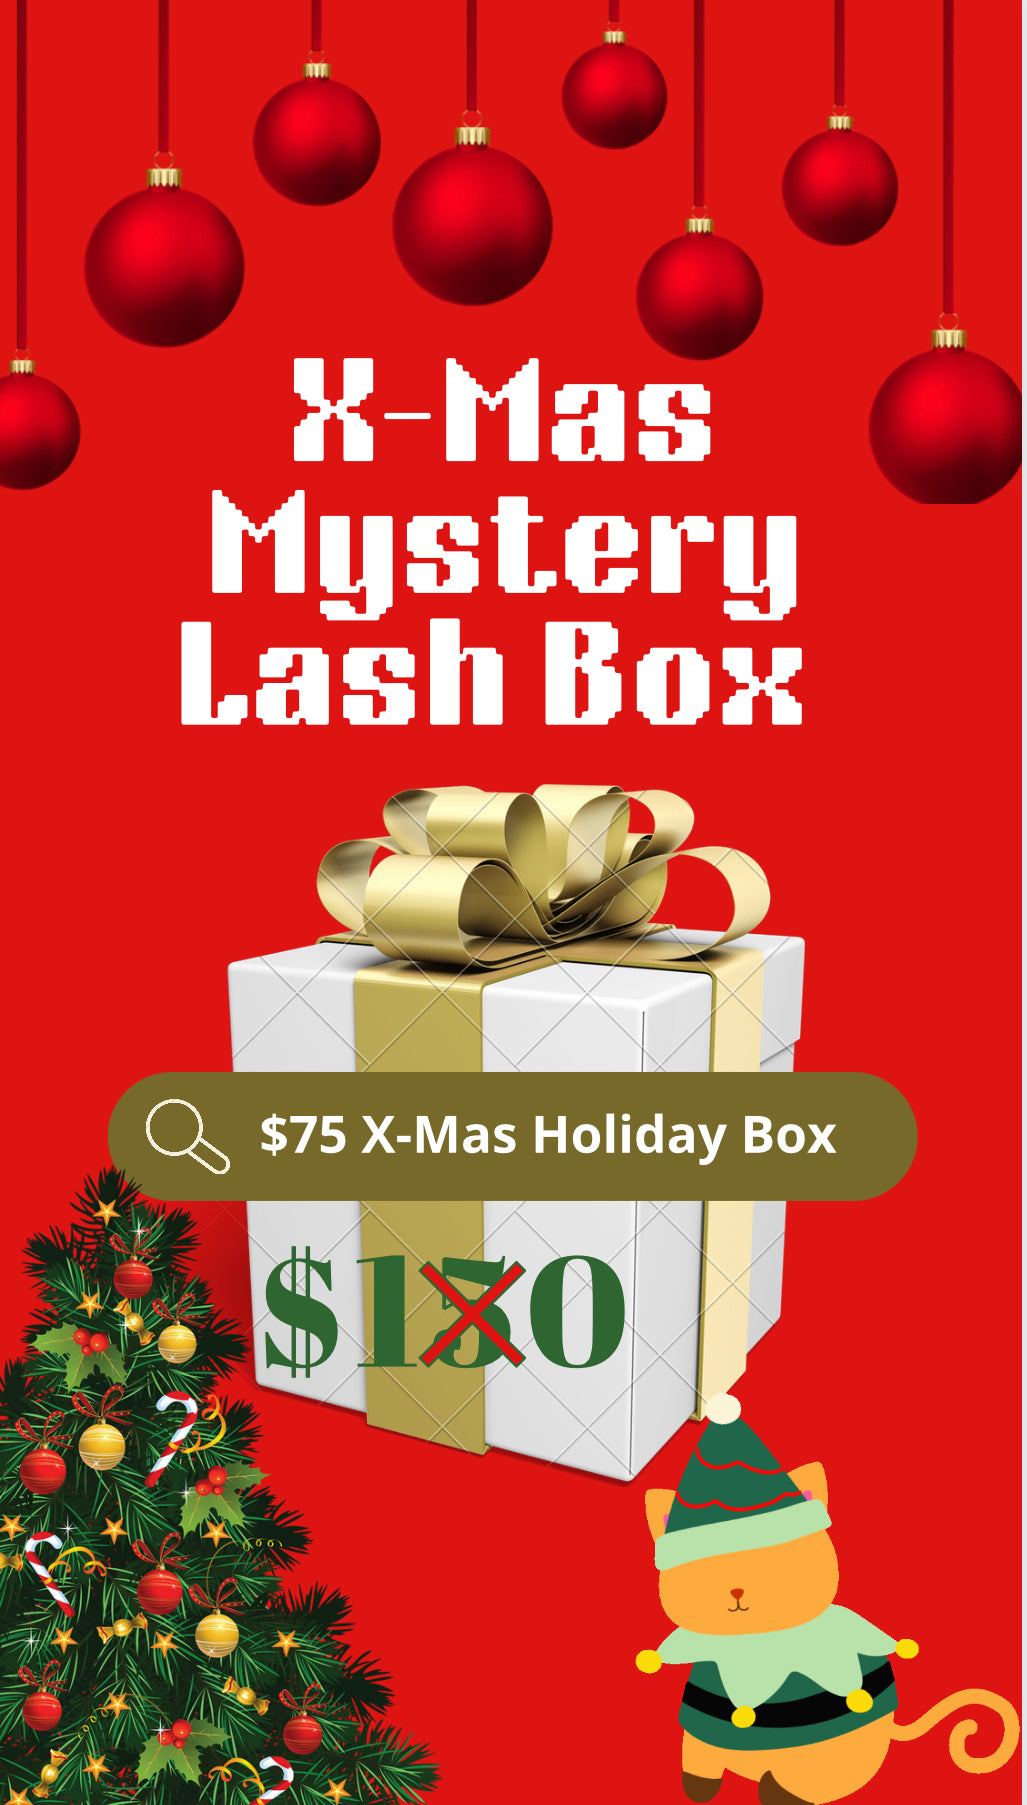 X-Mas Limited Edition Mystery Lash Box